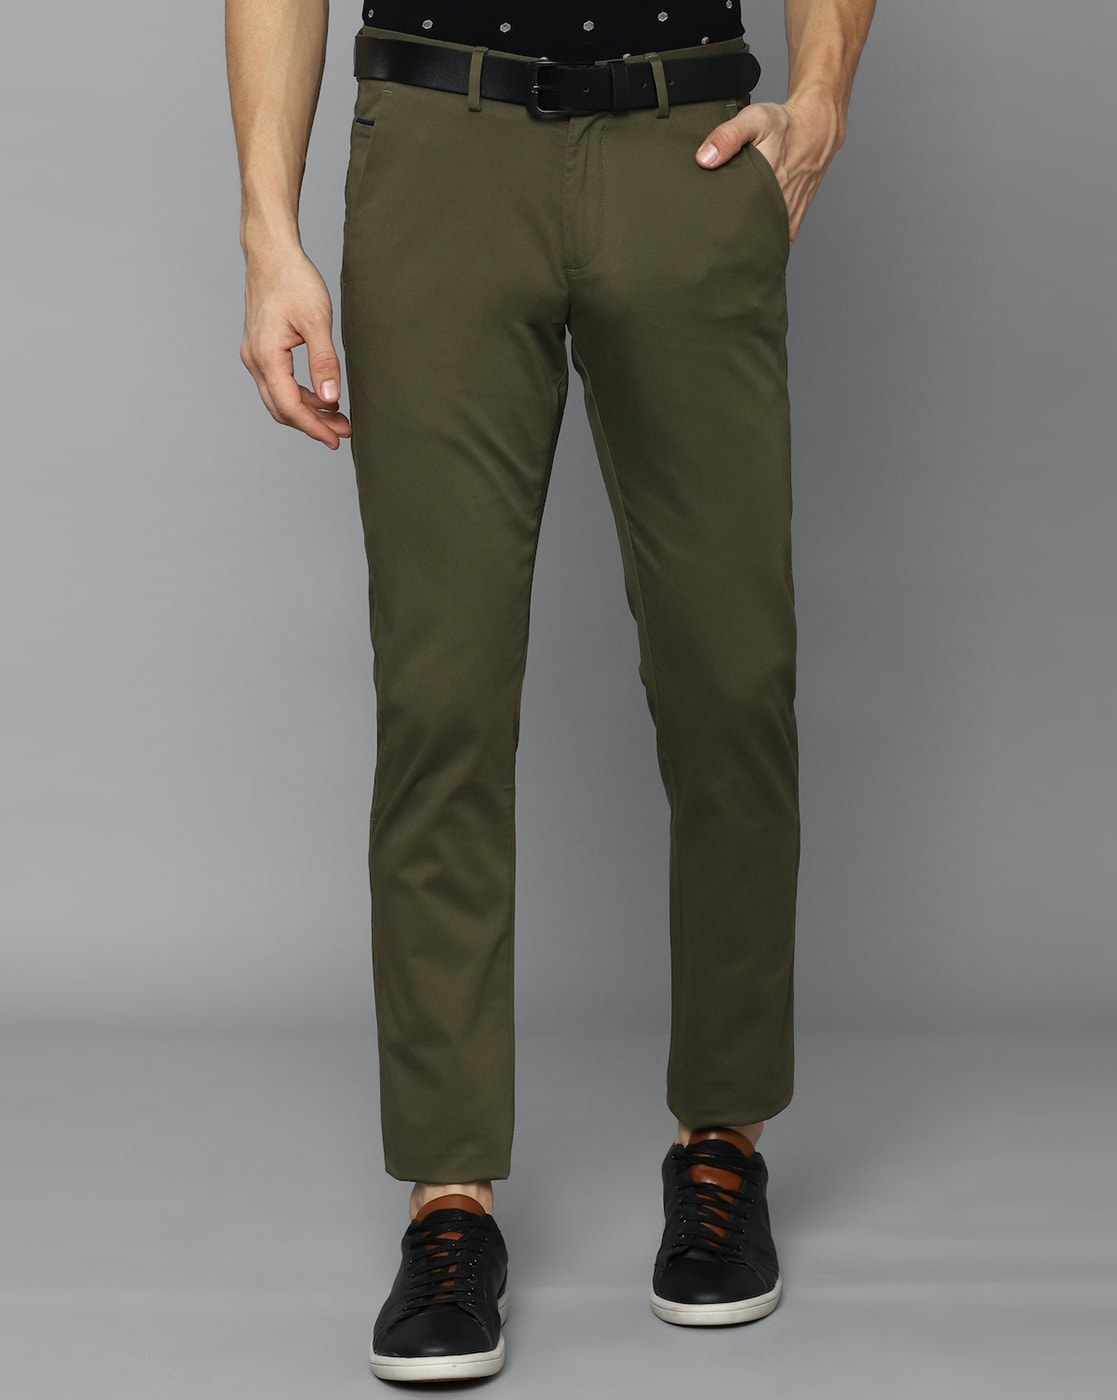 Buy Men Khaki Slim Fit Solid Casual Trousers Online  793960  Allen Solly